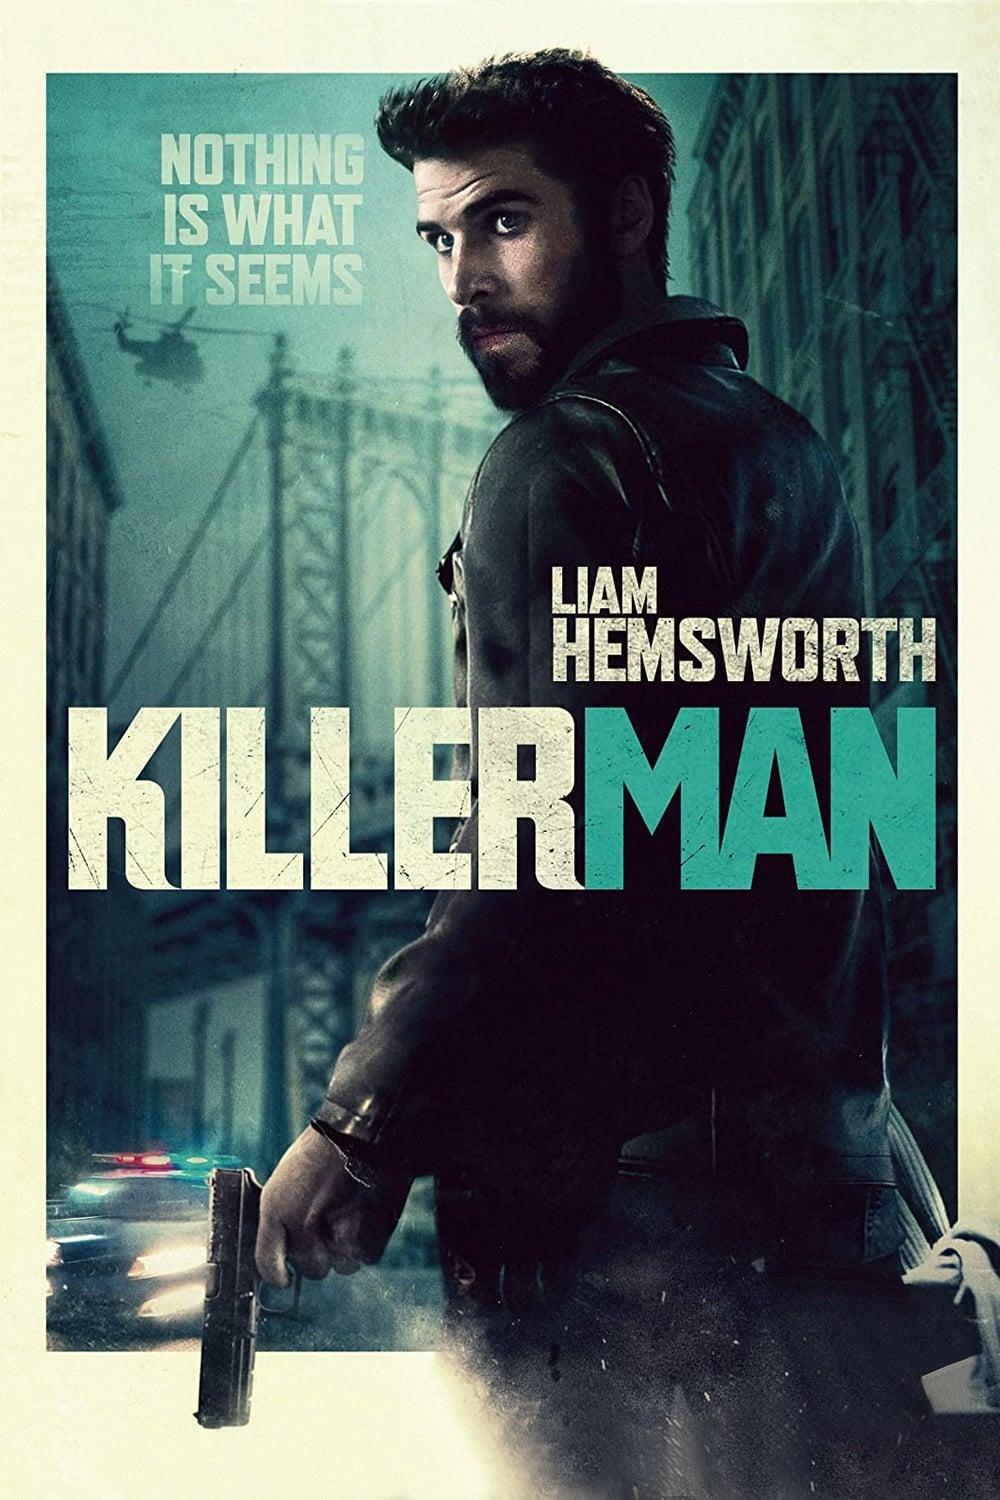 Killerman poster